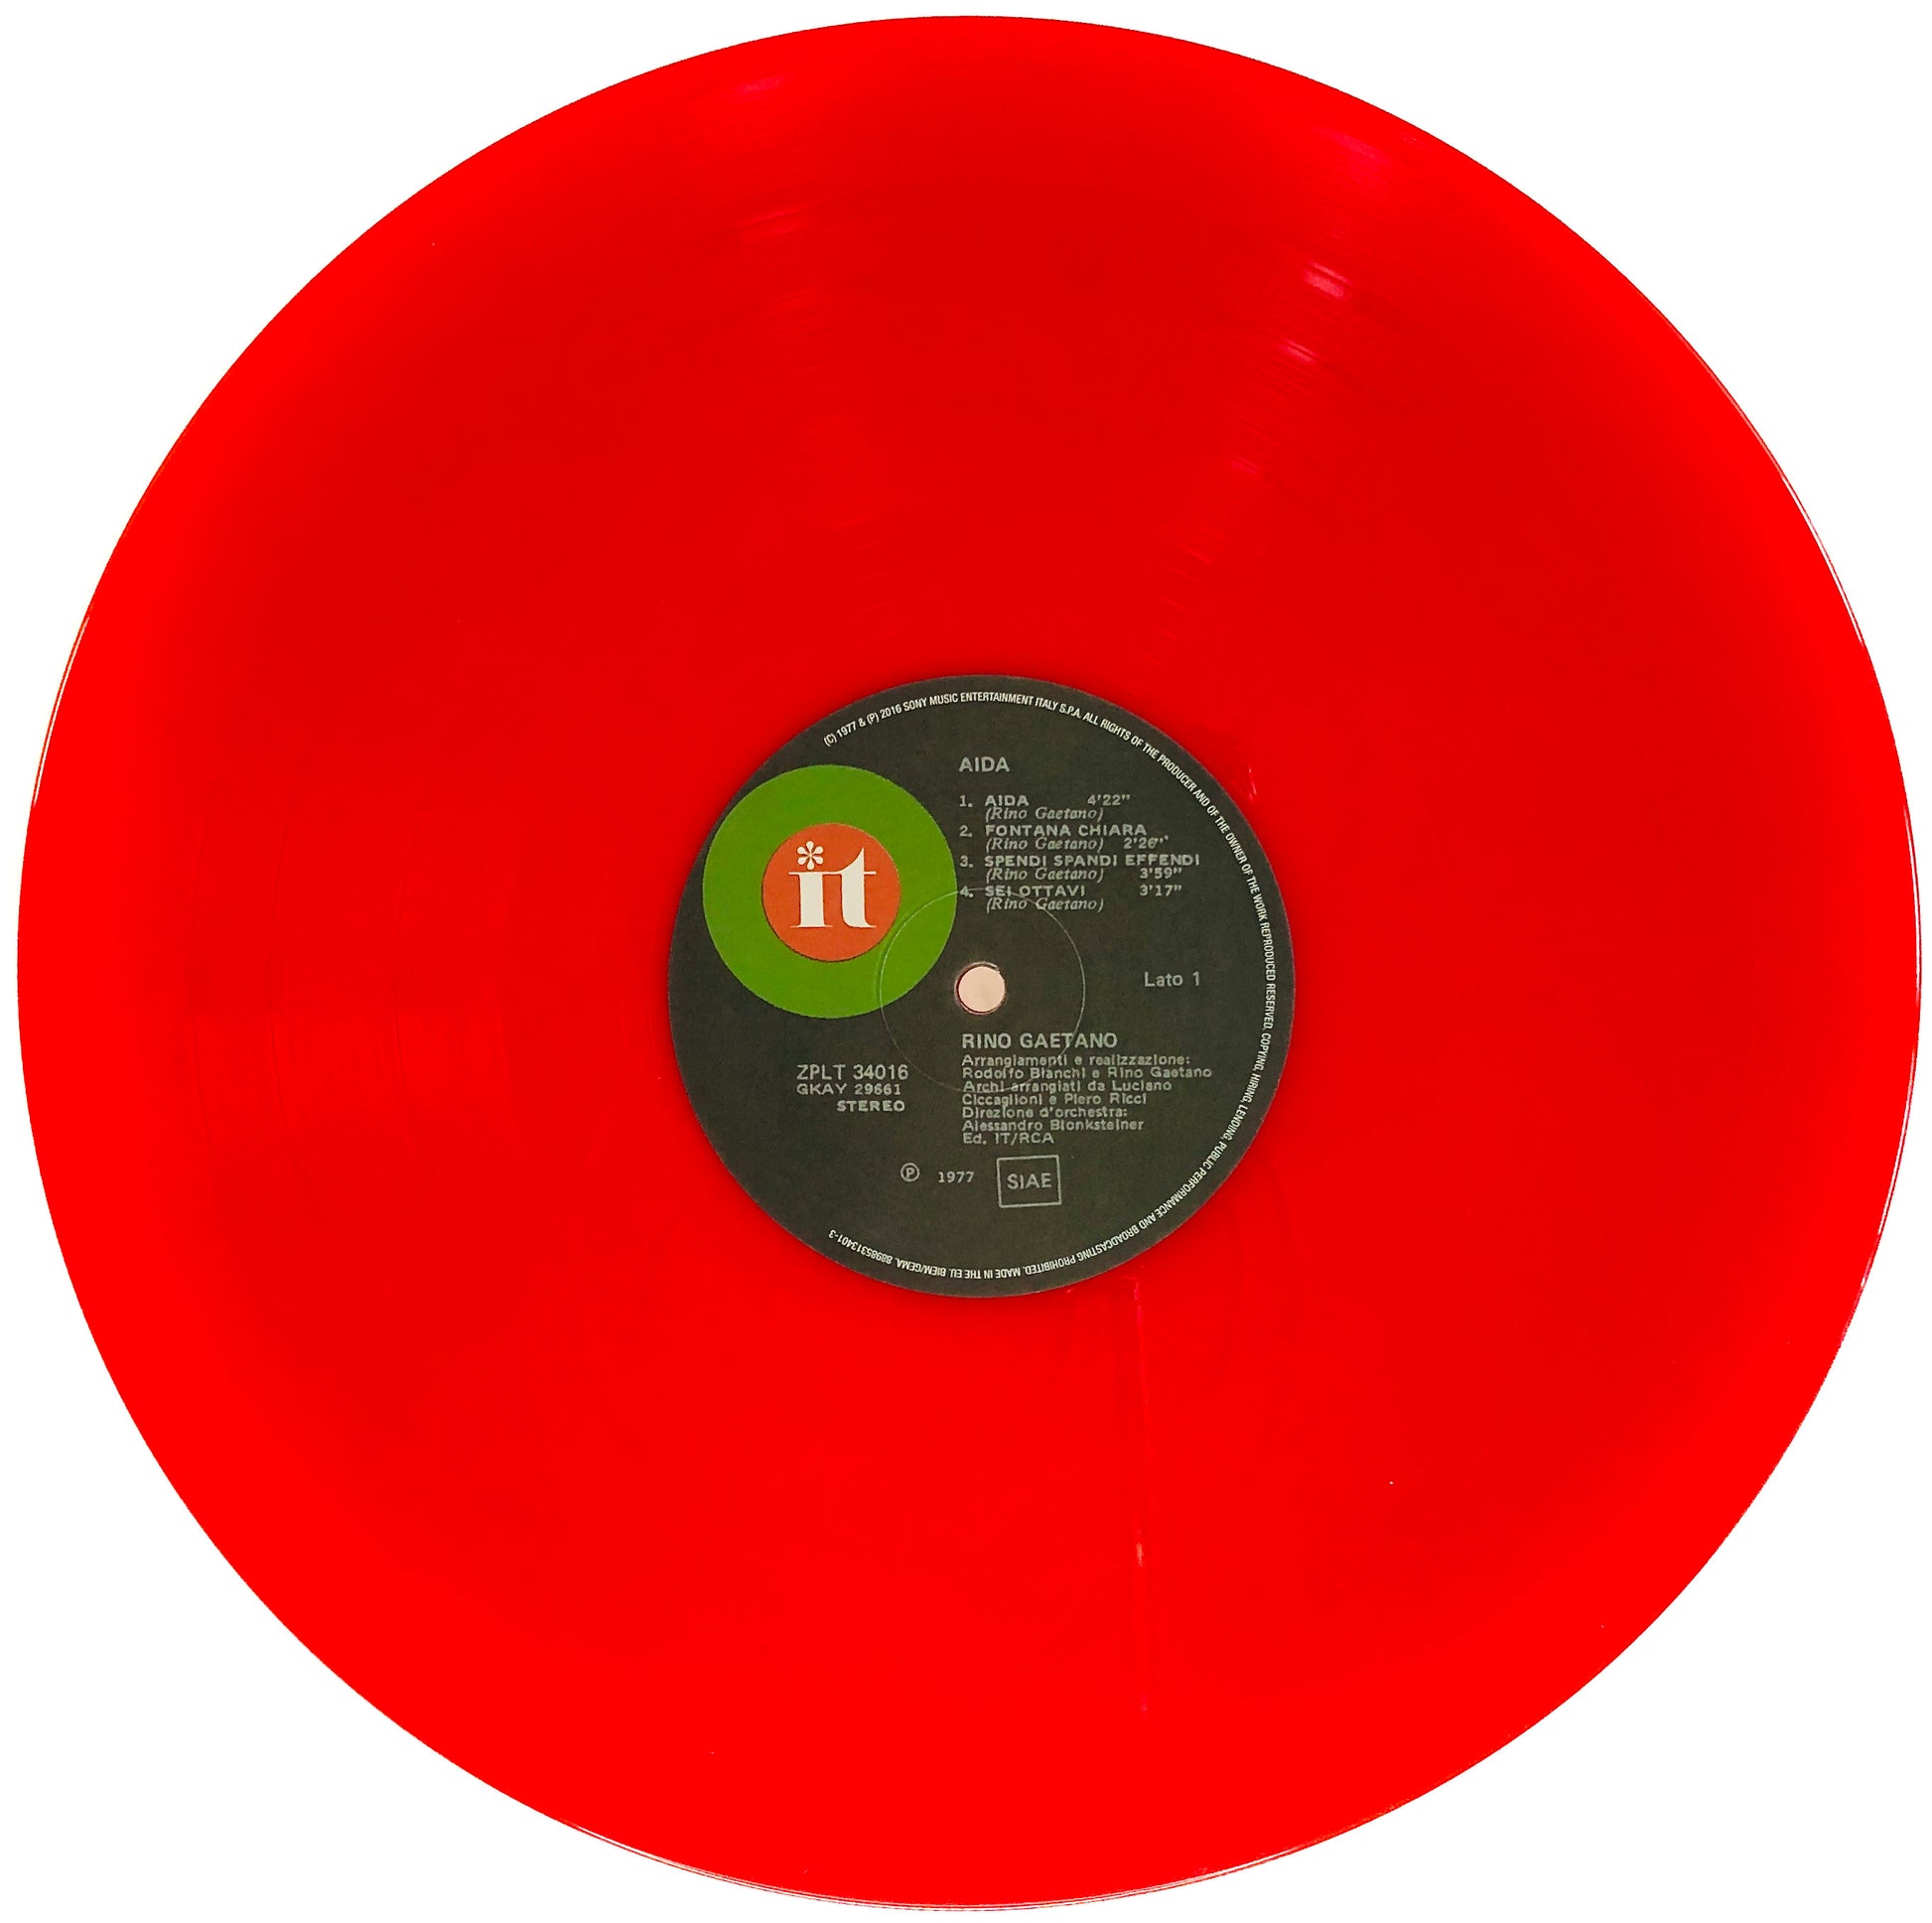 RINO GAETANO - Aida - Vinile Rosso Solido (Solid Red Vinyl)